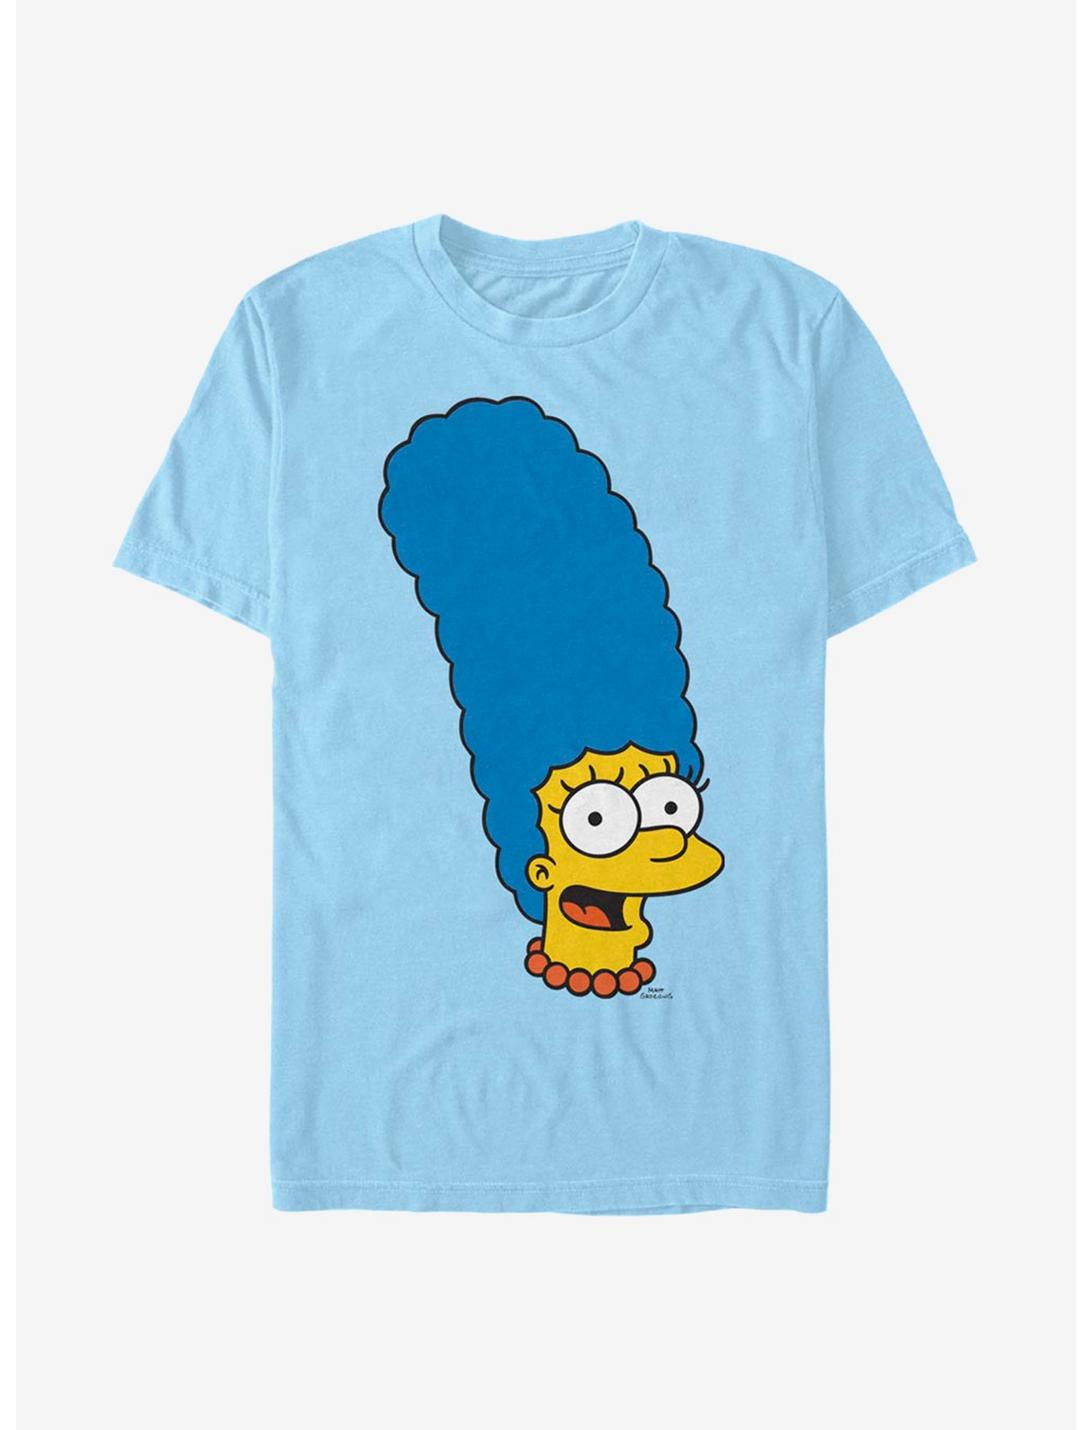 15595512 hi - The Simpsons Merch